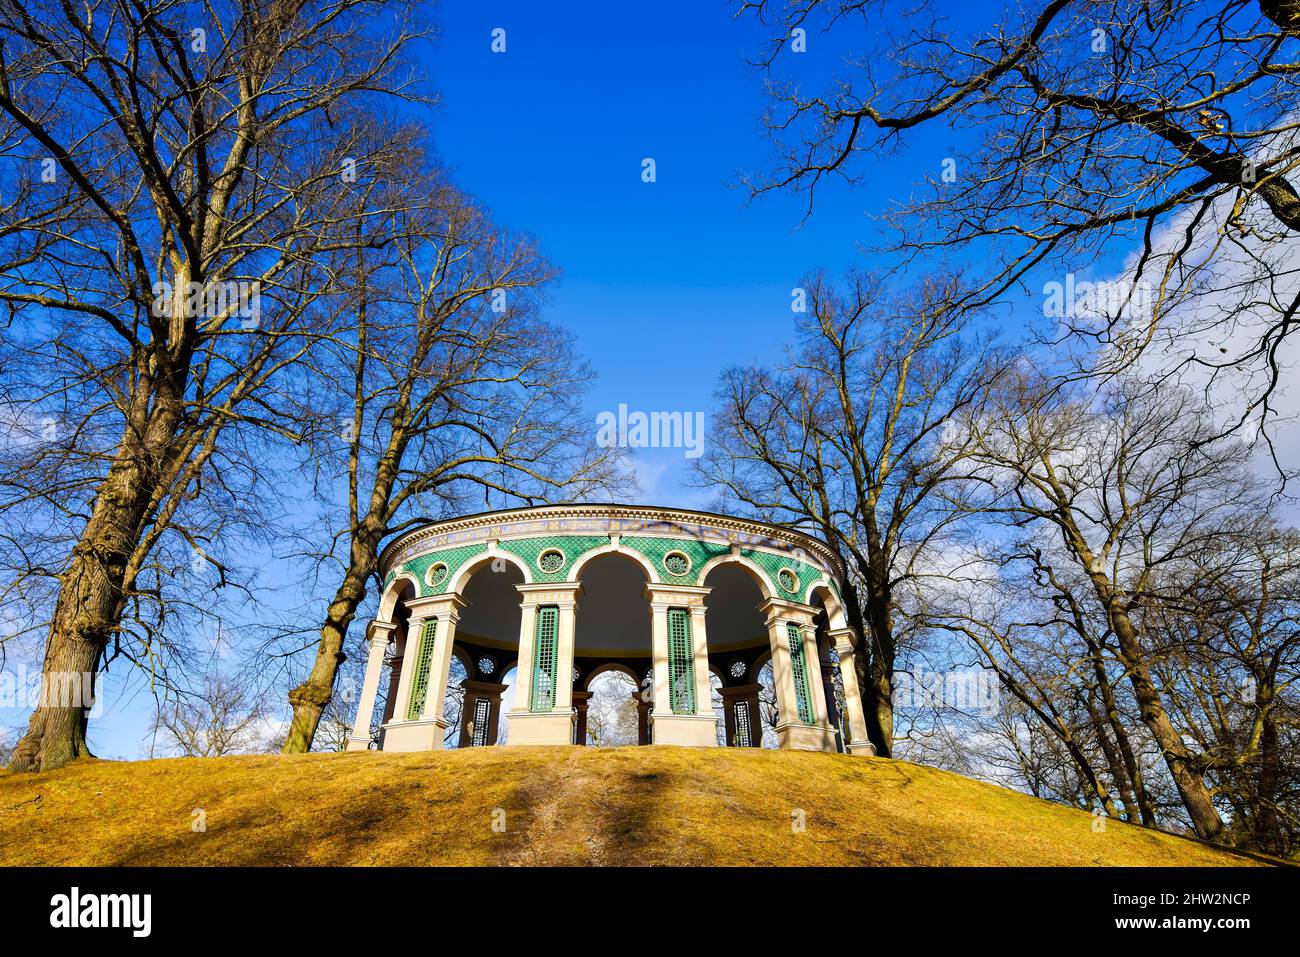 Le Temple de l'Echo. Haga Park, Solna, Suède. Banque D'Images